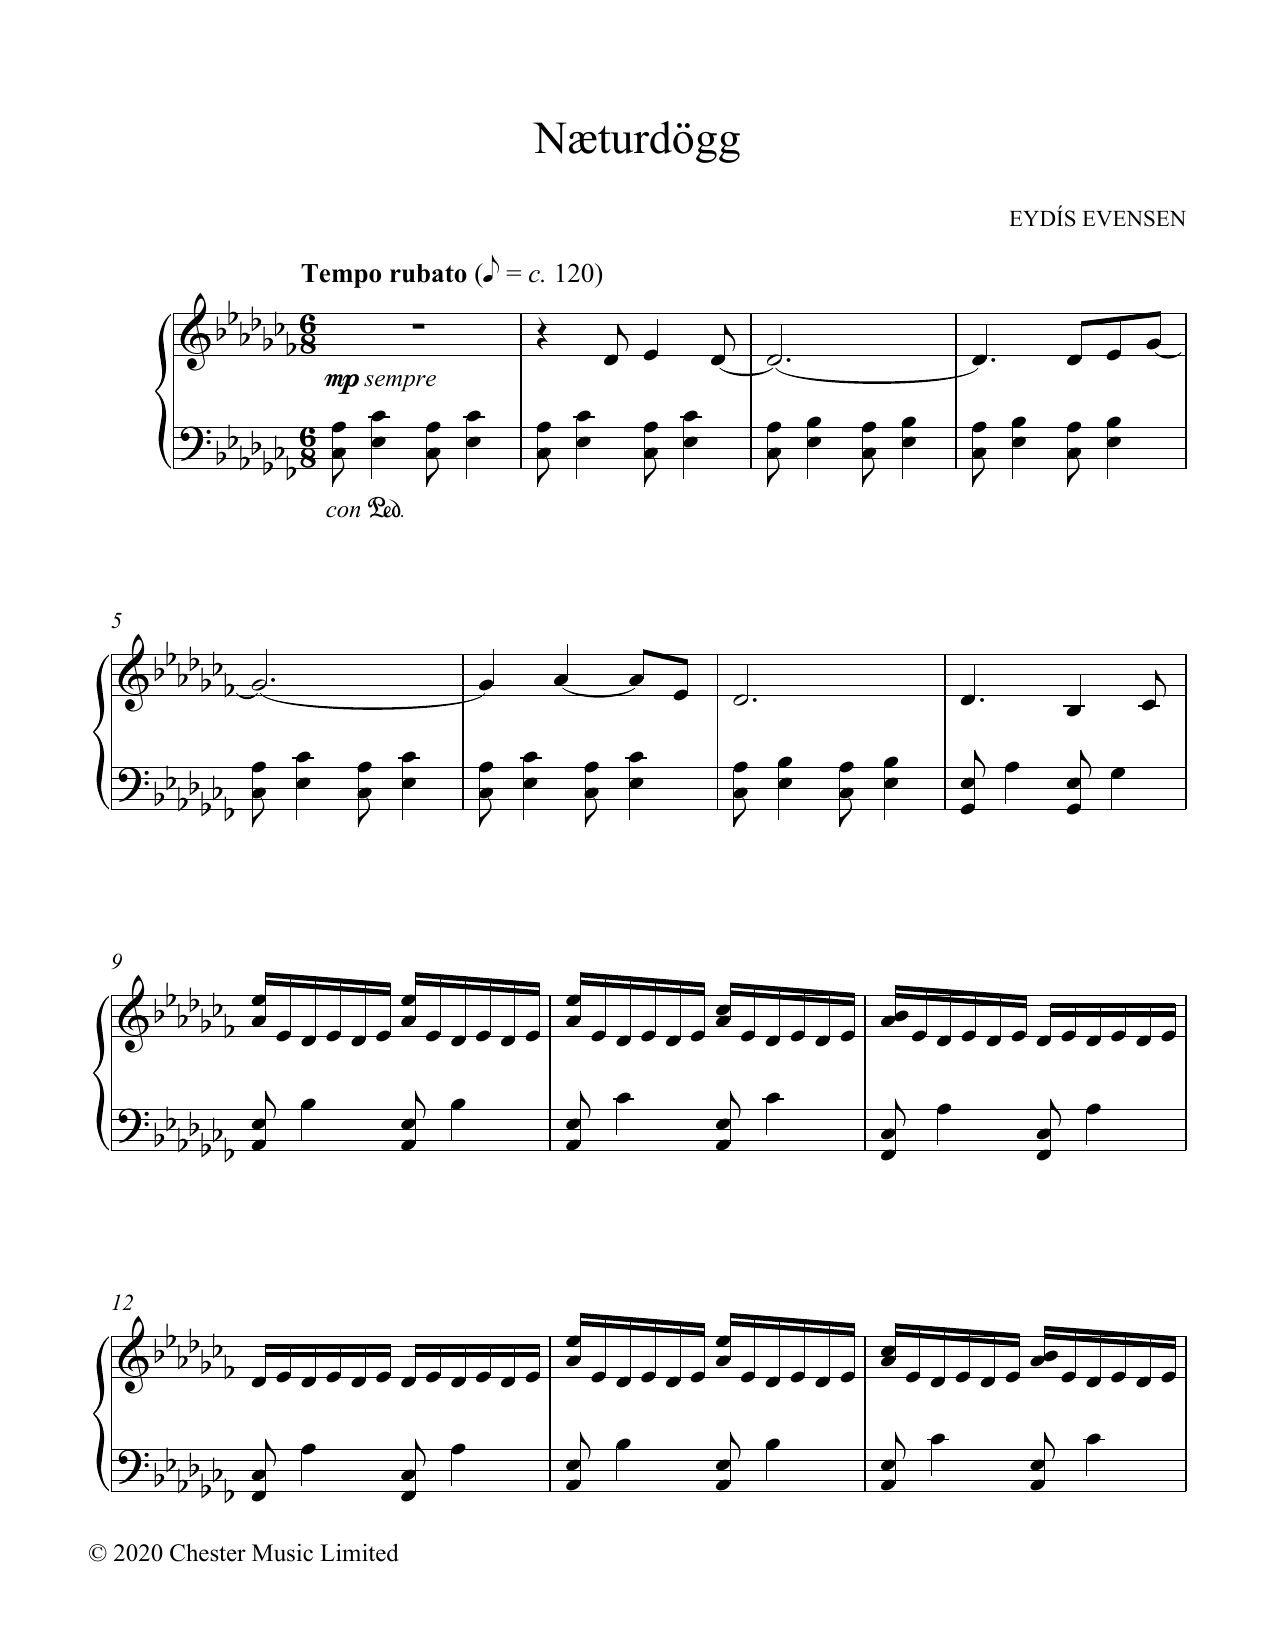 Eydis Evensen Næturdögg Sheet Music Notes & Chords for Piano Solo - Download or Print PDF